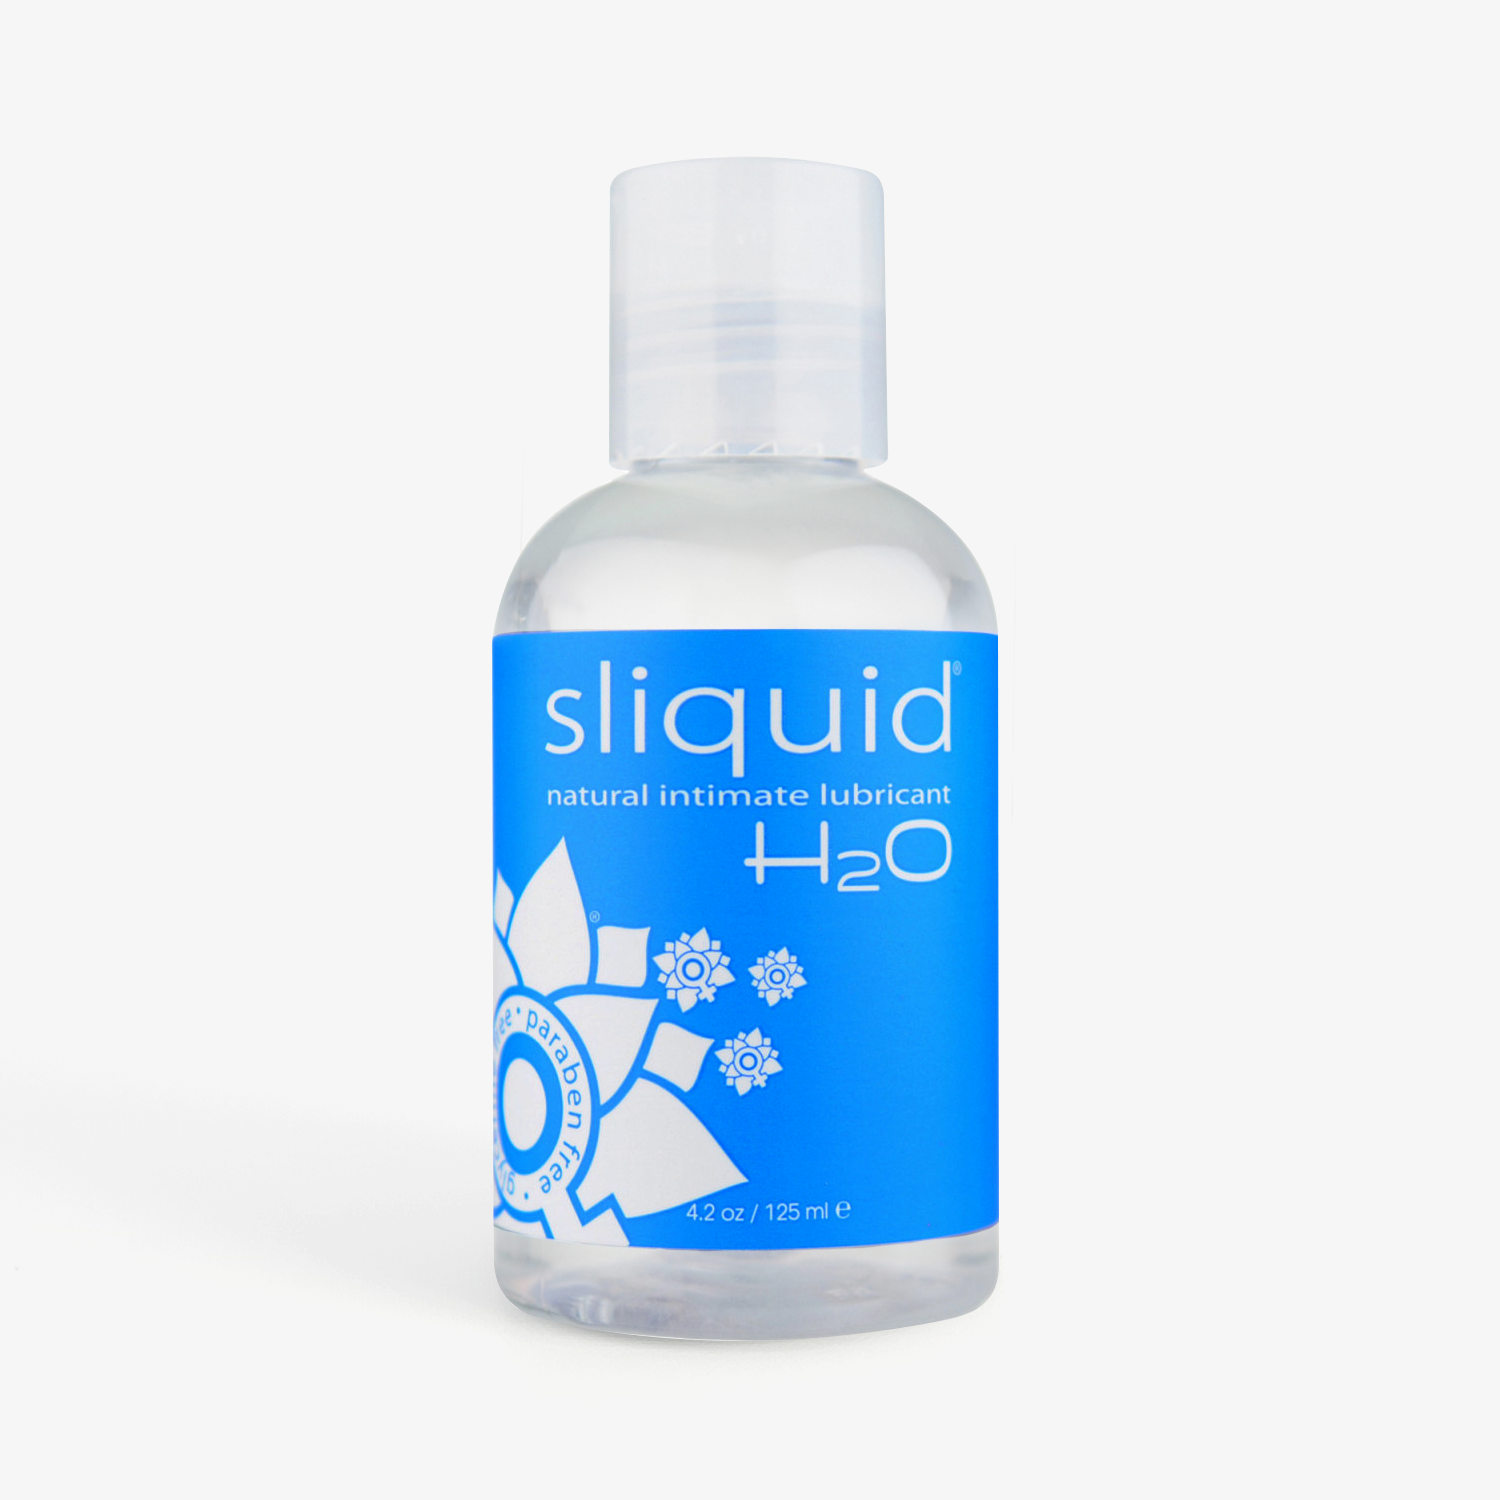 Sliquid H2O Original Water-Based Lubricant 4.2oz/125ml